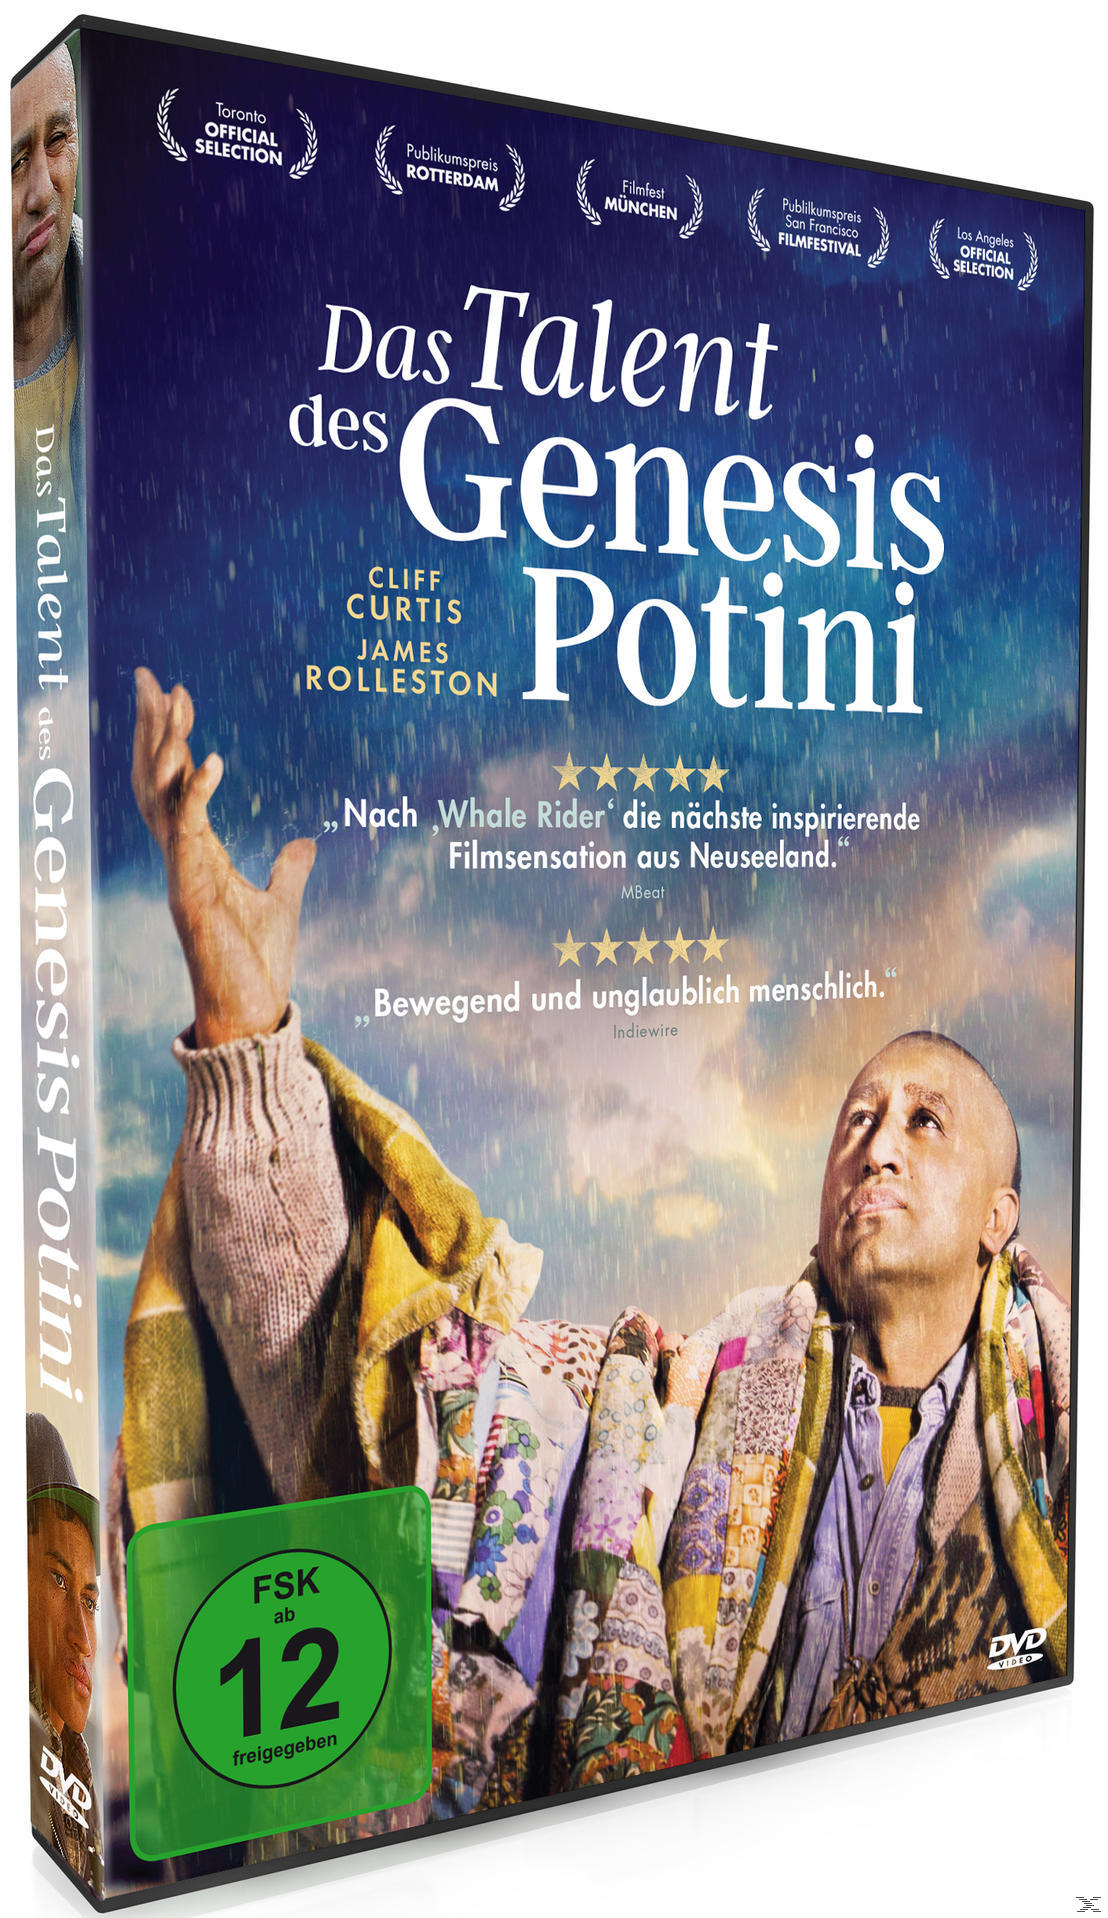 Das Talent des Genesis DVD Potini